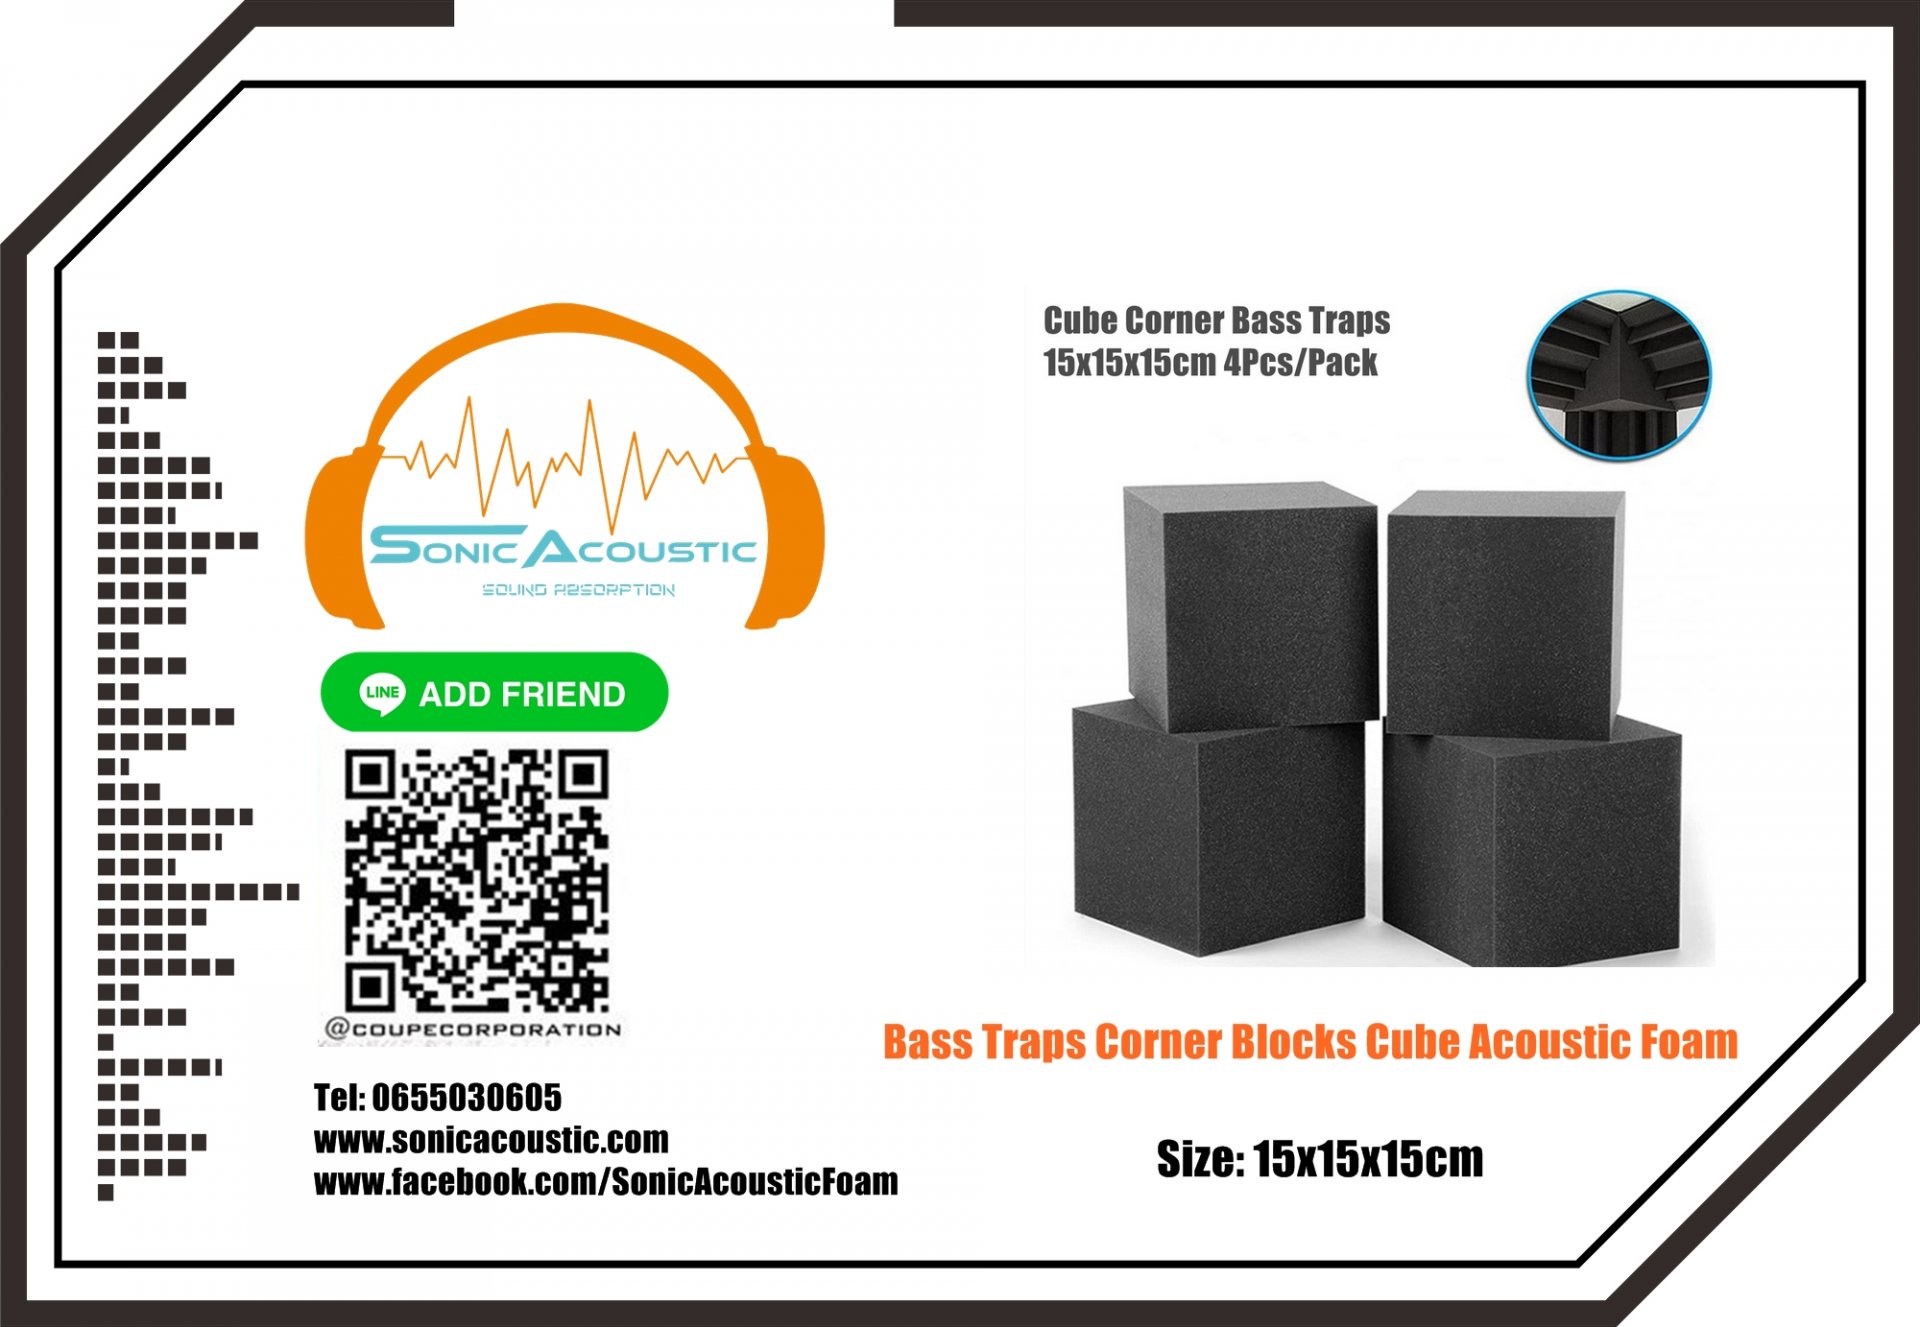 Bass Traps Corner Blocks Cube   โฟมซับเสียงเข้ามุมห้องทรงสี่เหลียม 4ชิ้น